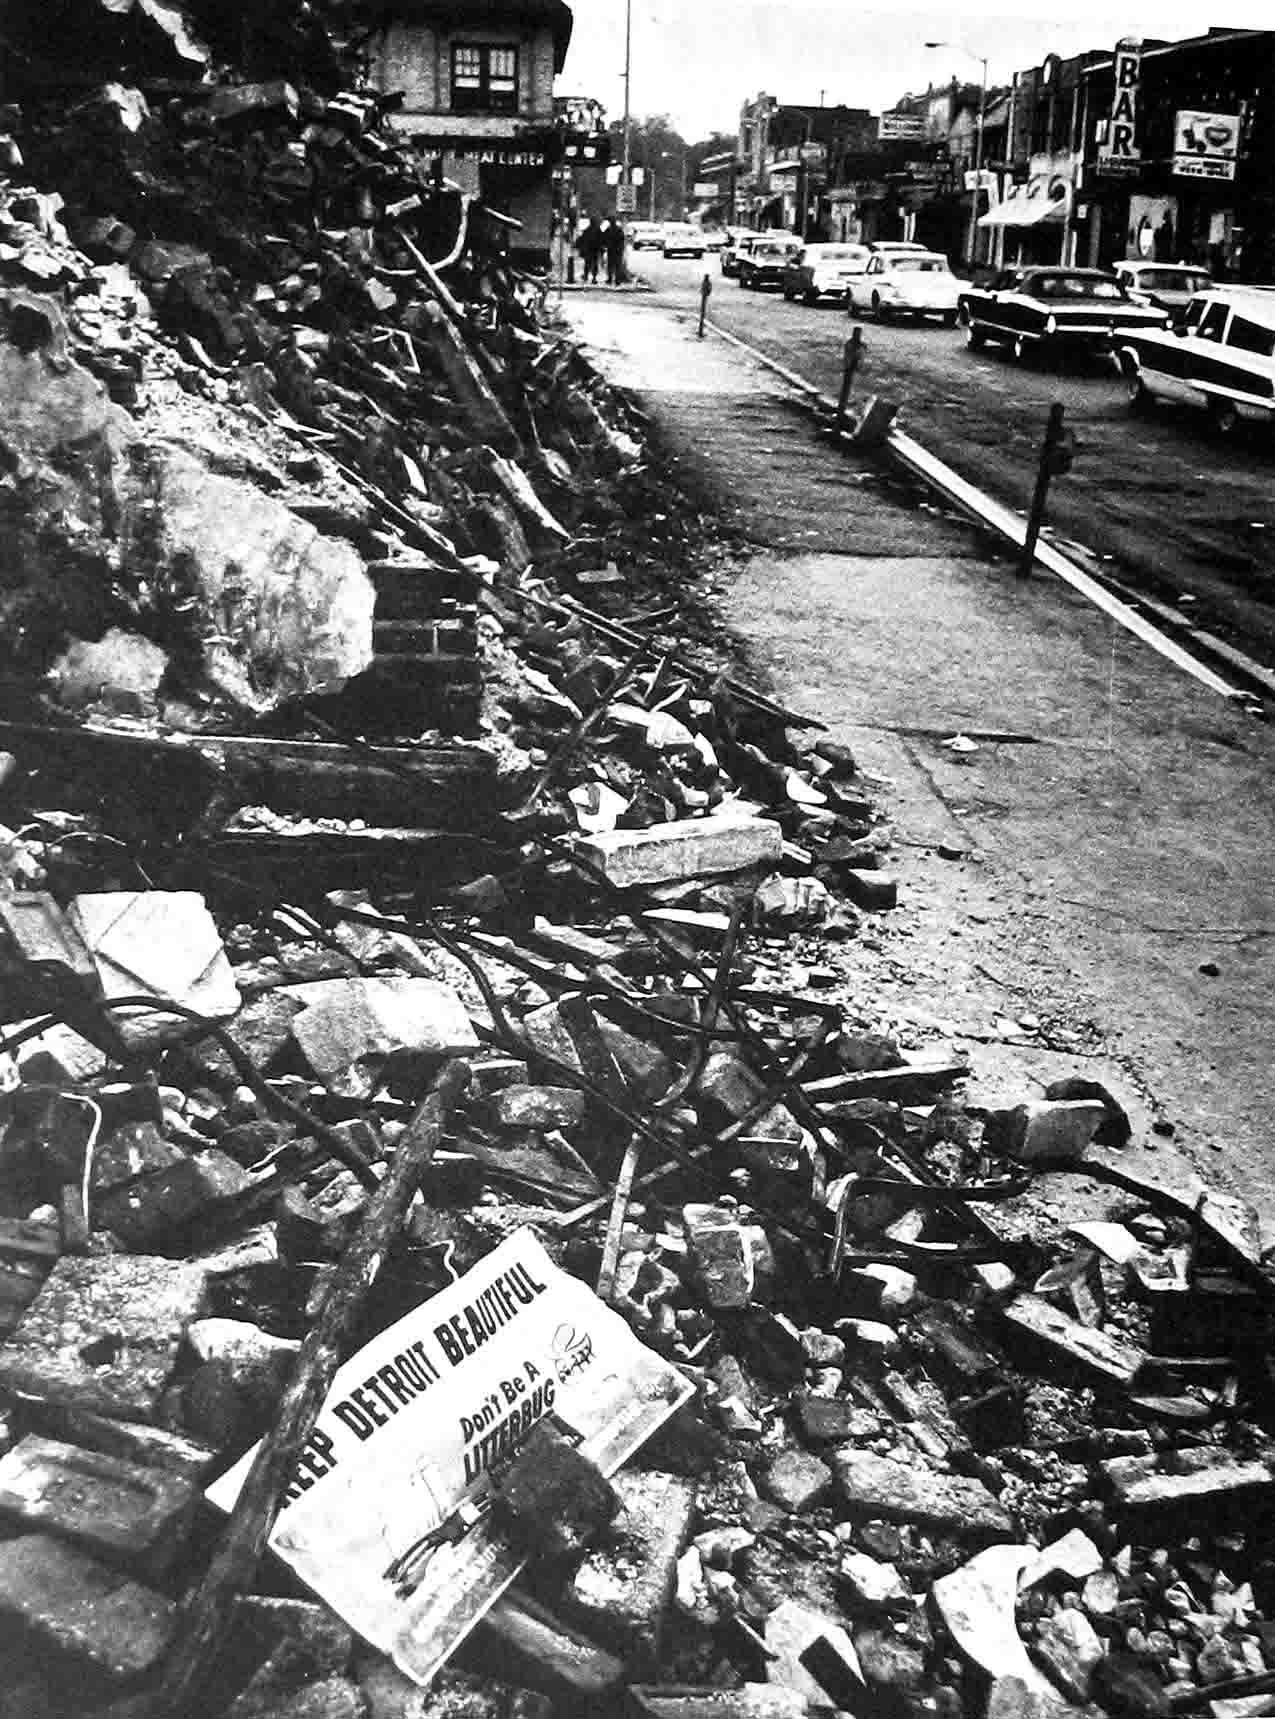 1967 Detroit riot 12th Street damage